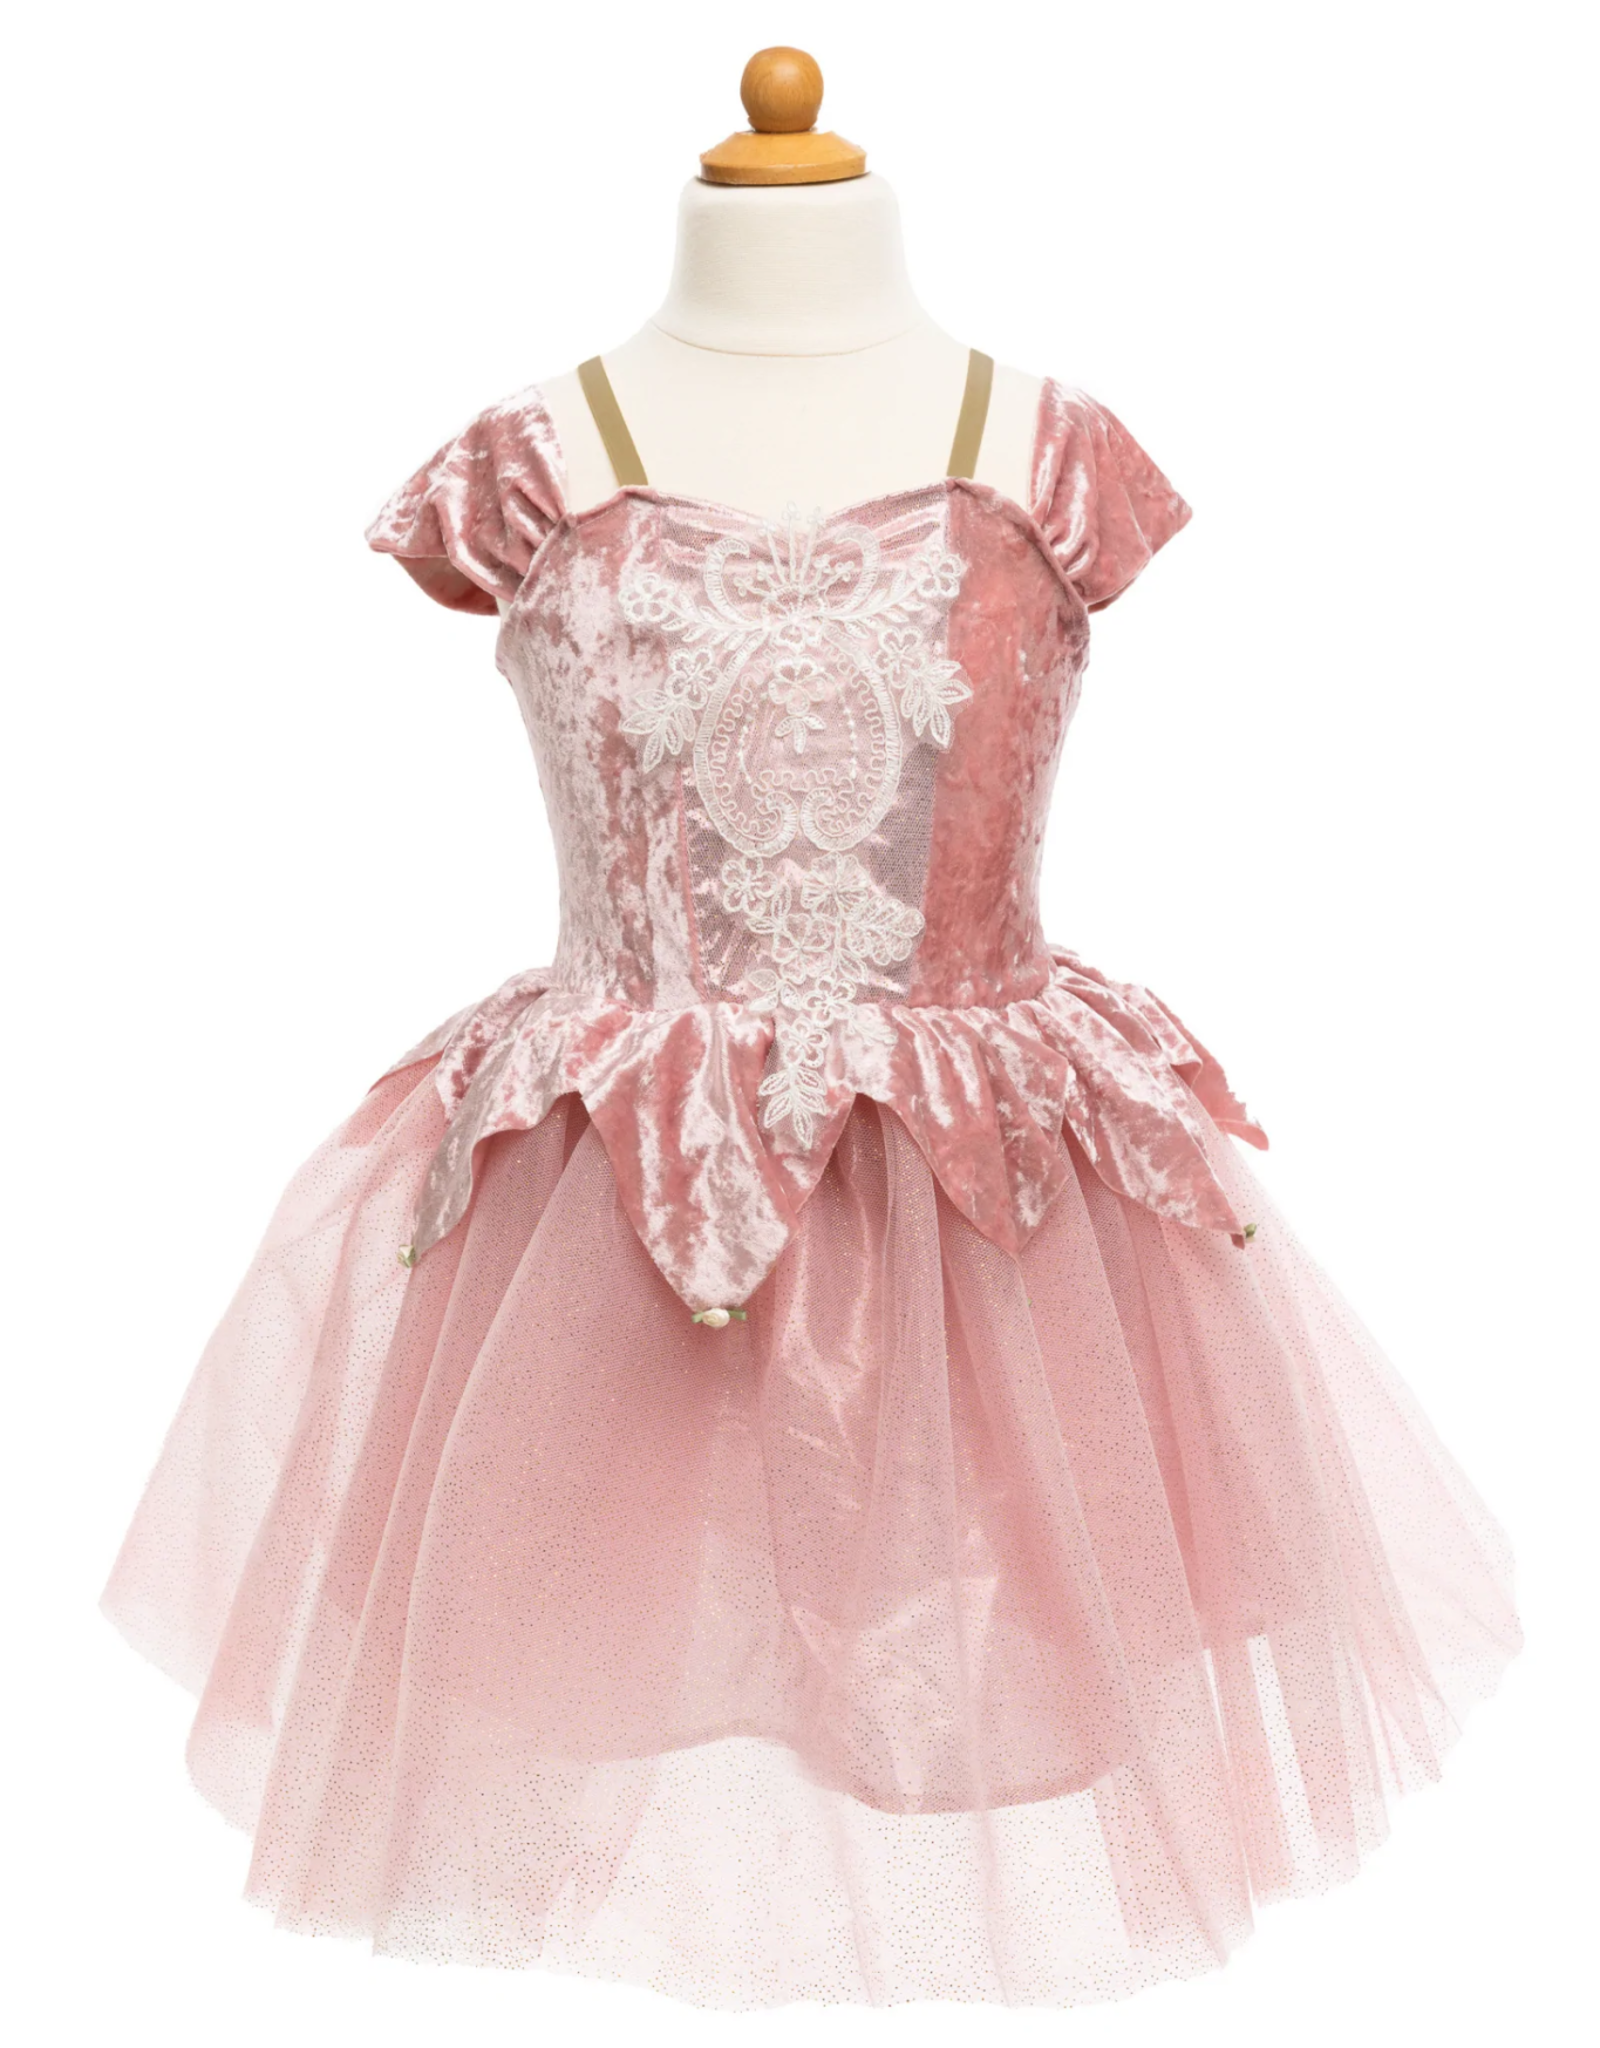 Great Pretenders Holiday Ballerina Dress, Dusty Rose, Size 5-6